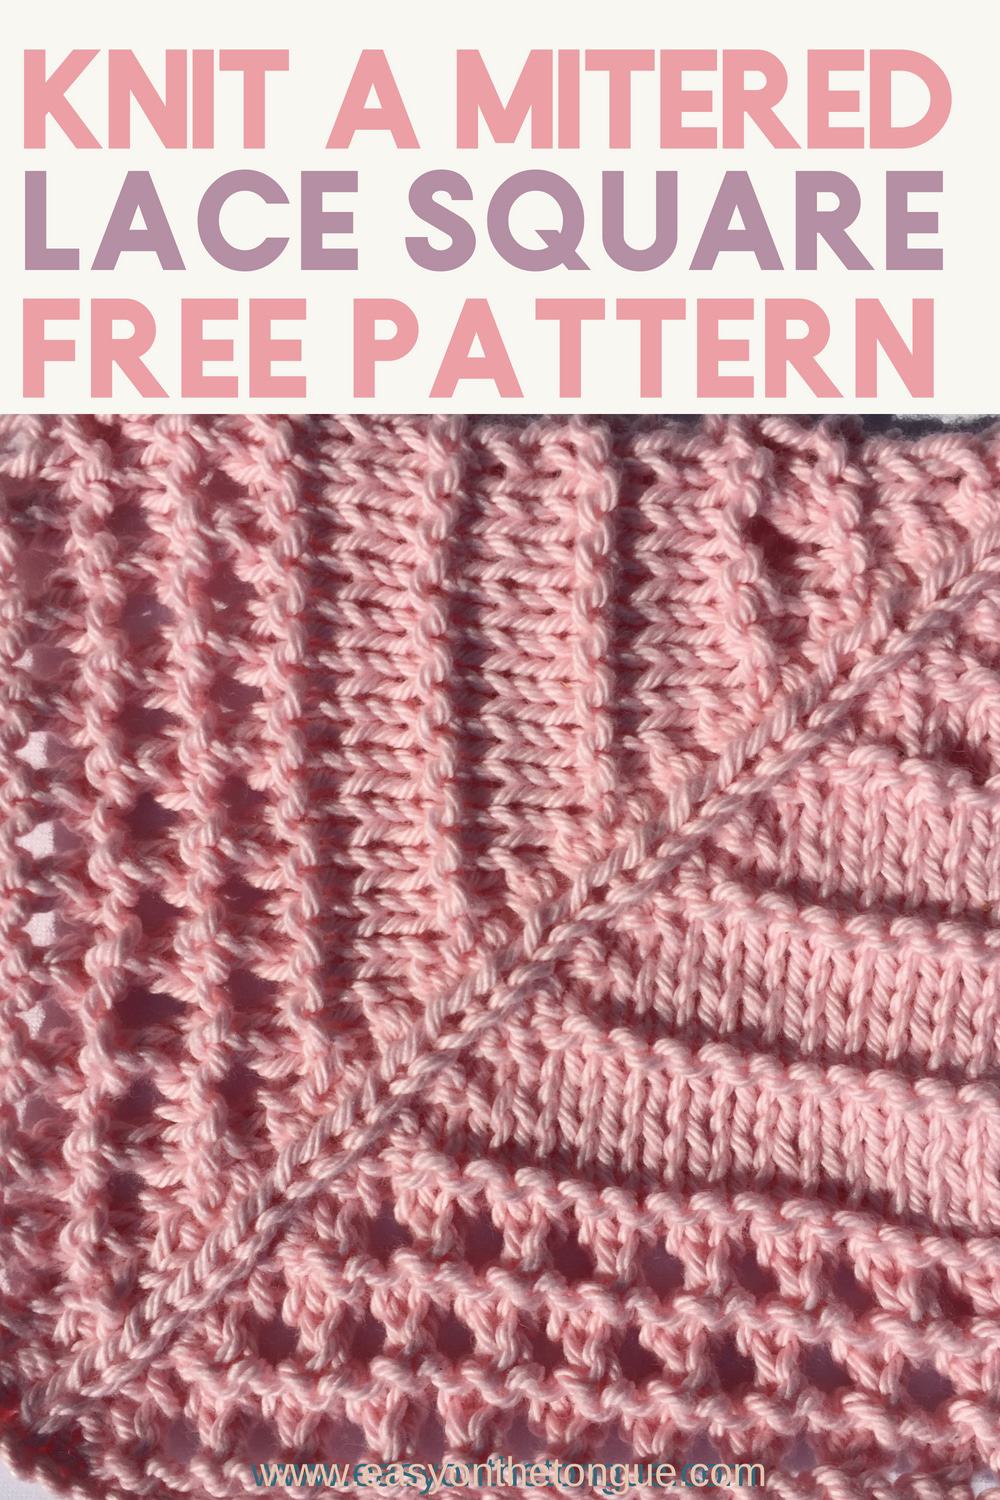 Knit Mitred Lace Square Pattern miteredsquare knitlacesquare knitsquare How to Knit Stocking Stitch Ridge – Knitting Stitches